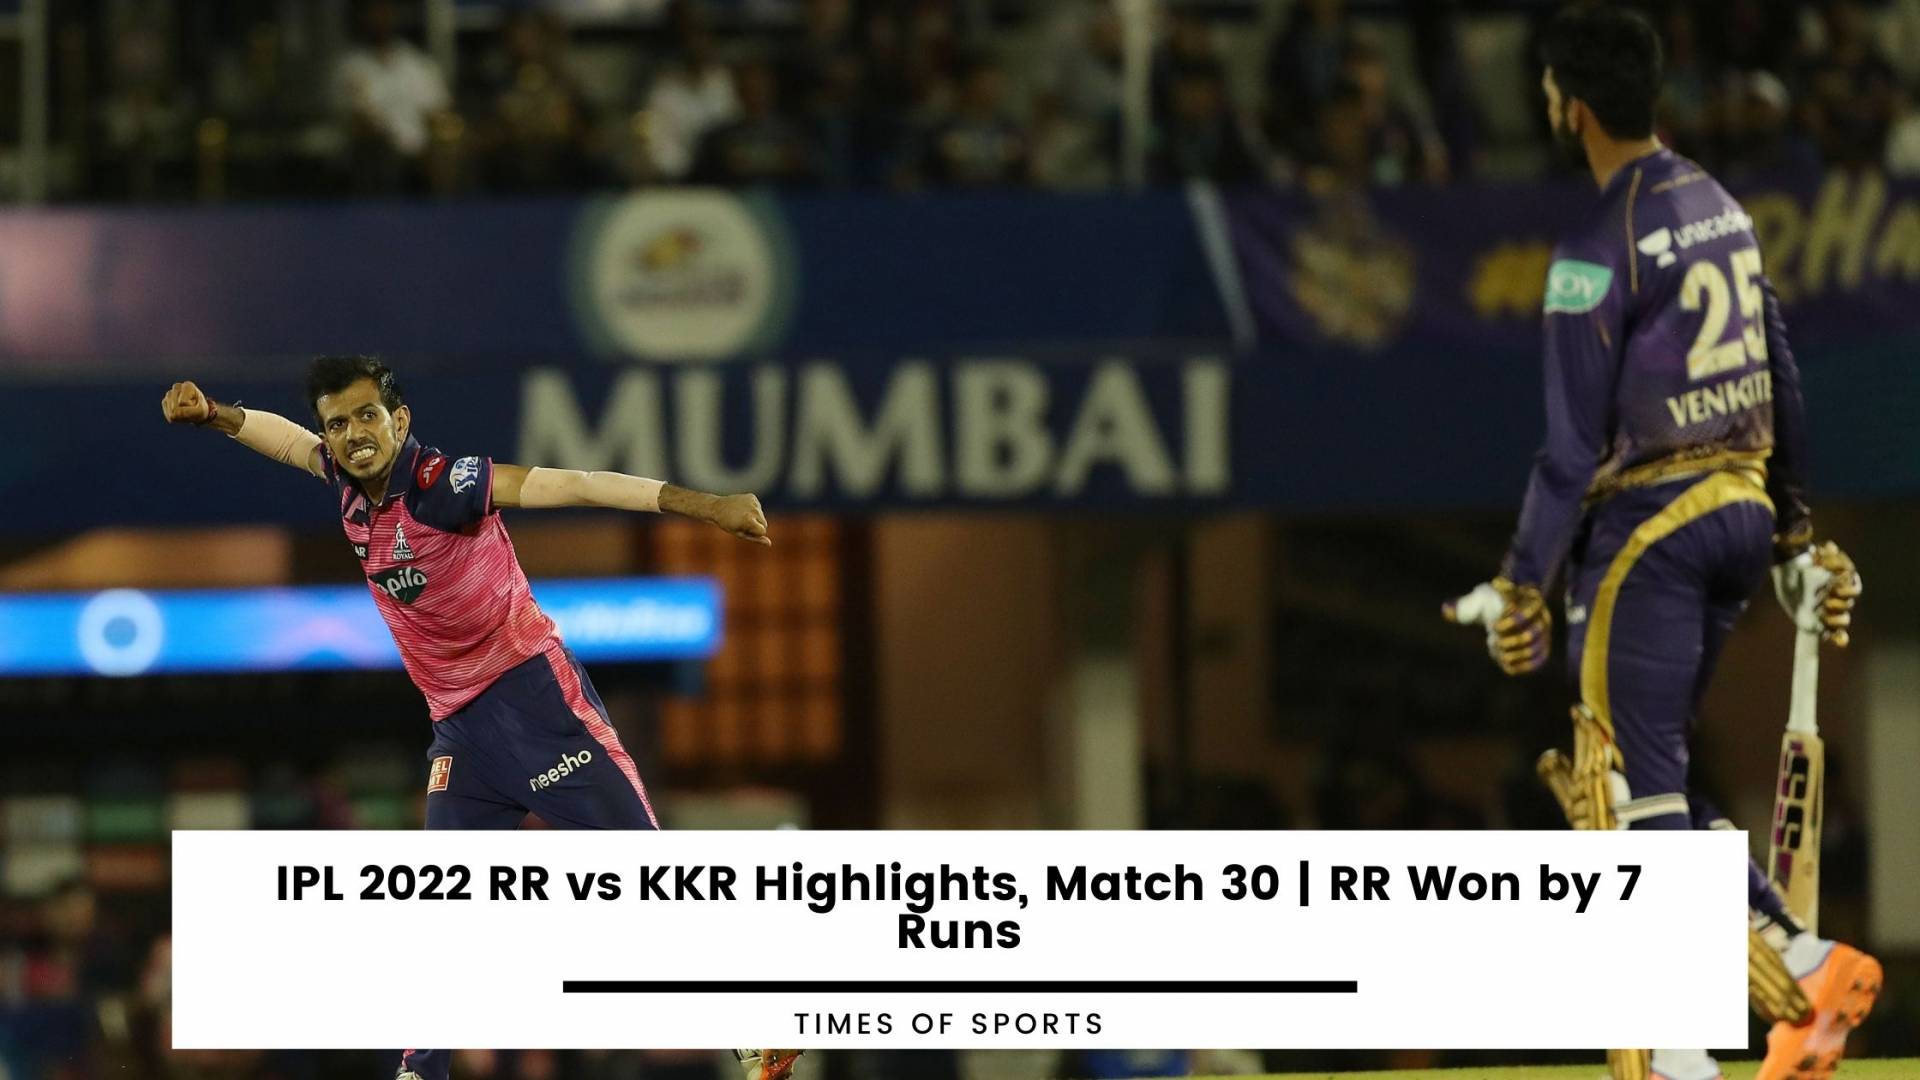 IPL 2022 RR vs KKR Highlights, Match 30 RR Won by 7 Runs